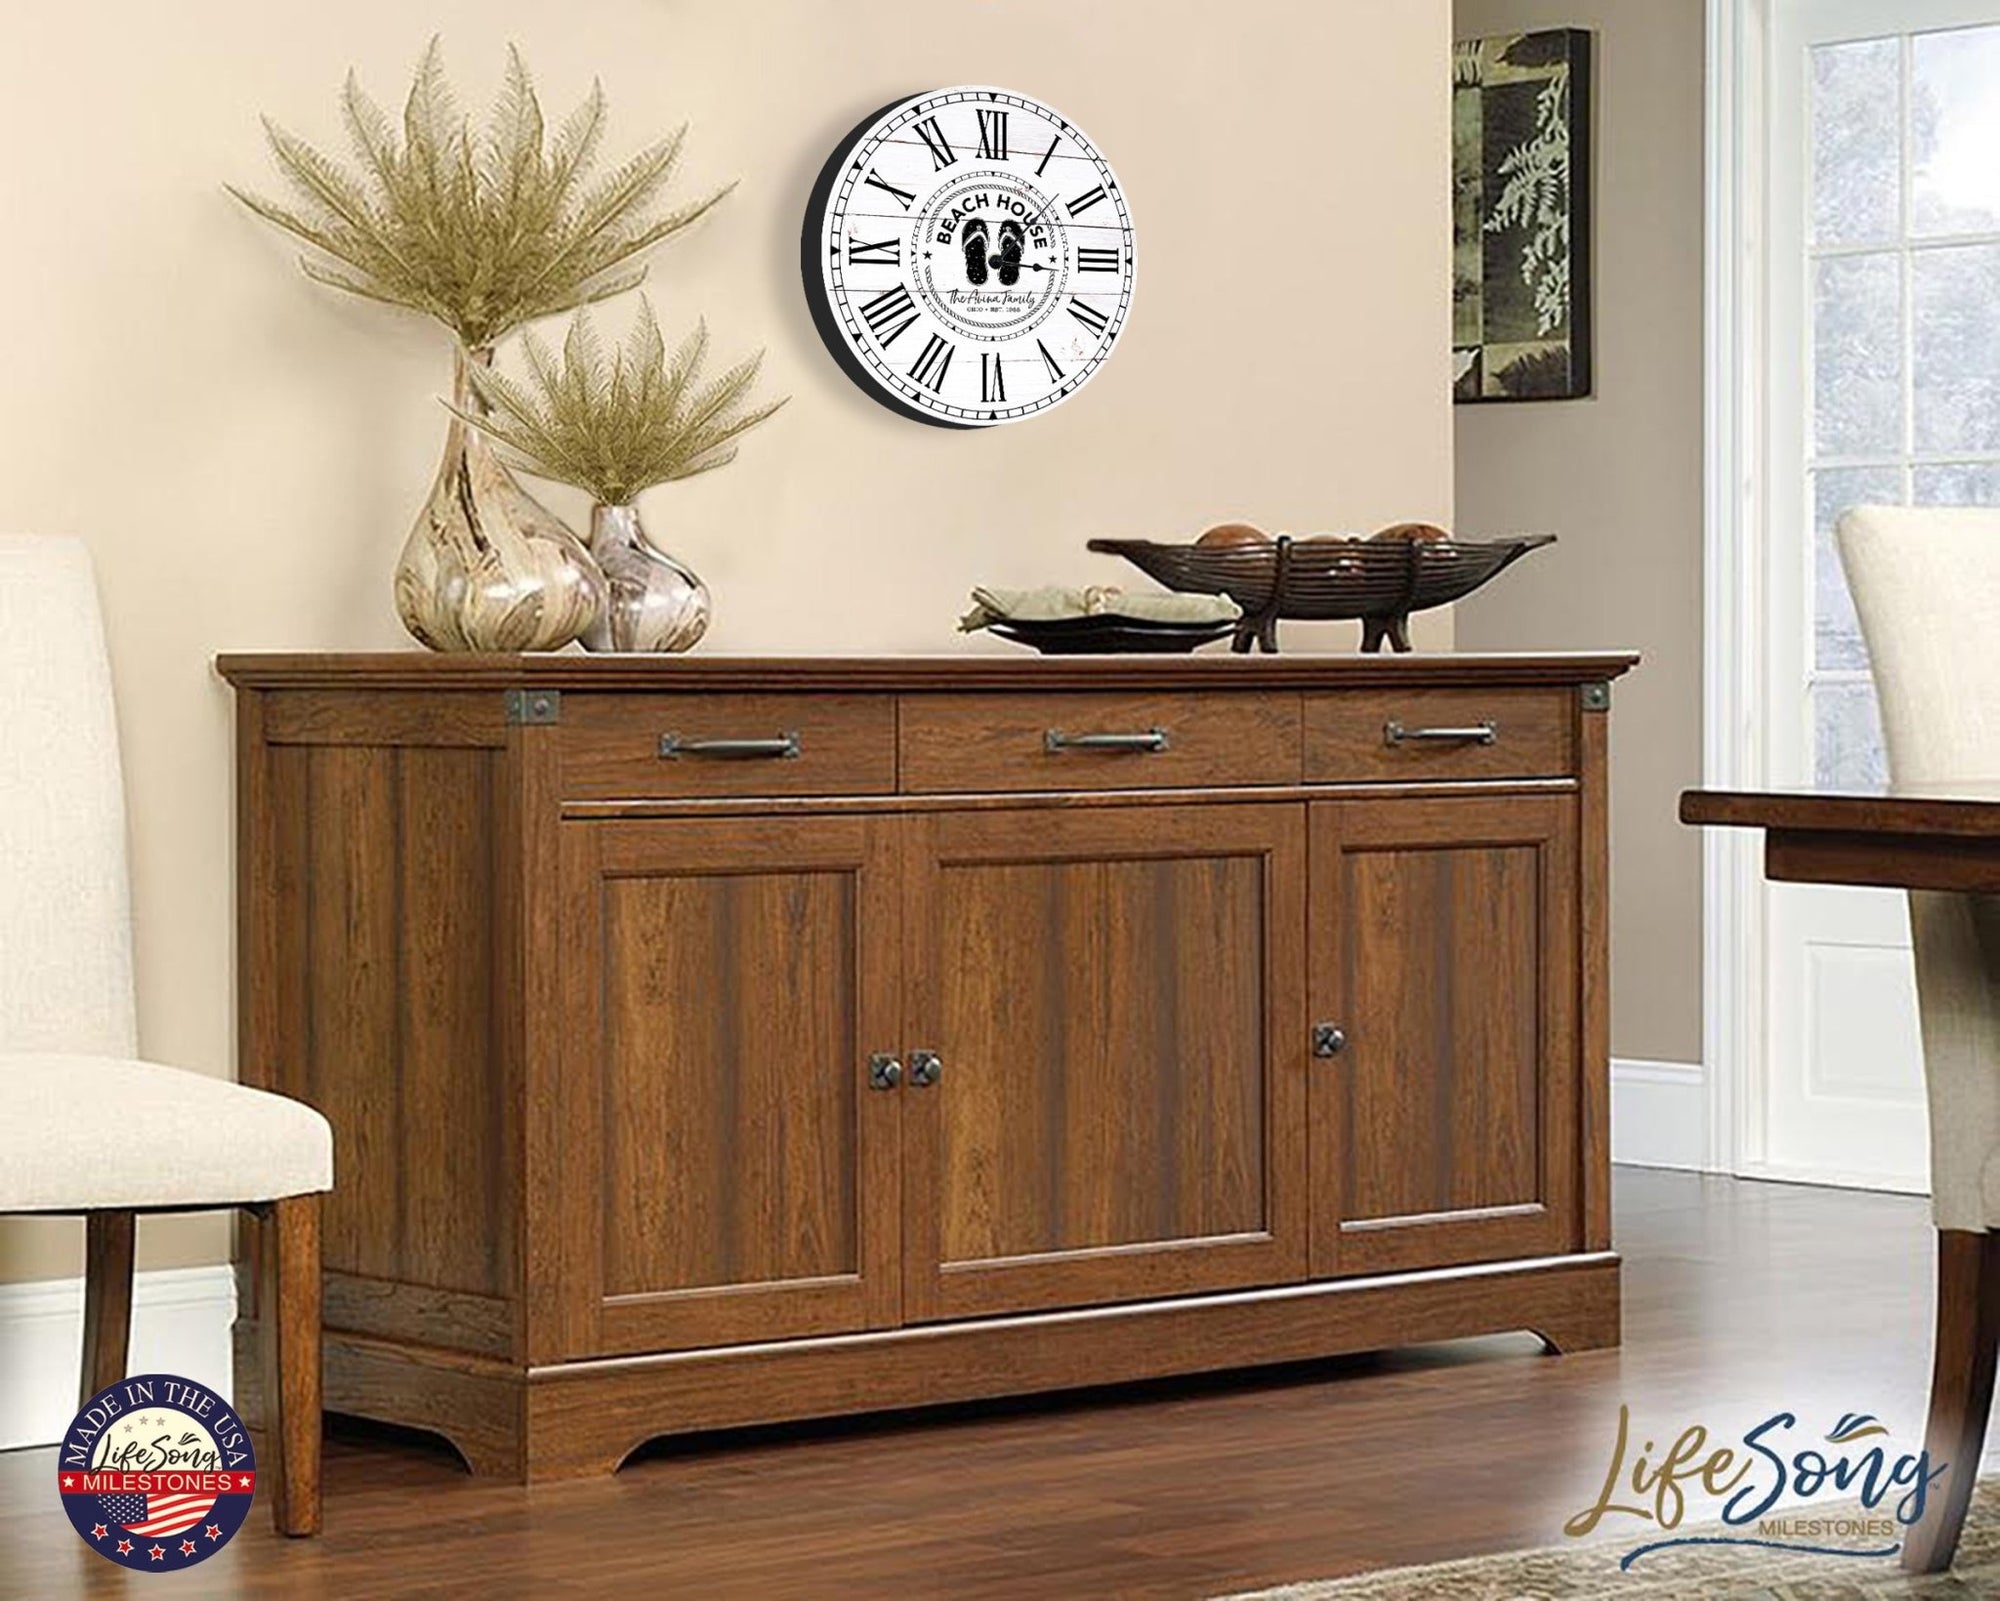 Custom Everyday Home and Family Clock 12” x .0125” Beach House - LifeSong Milestones